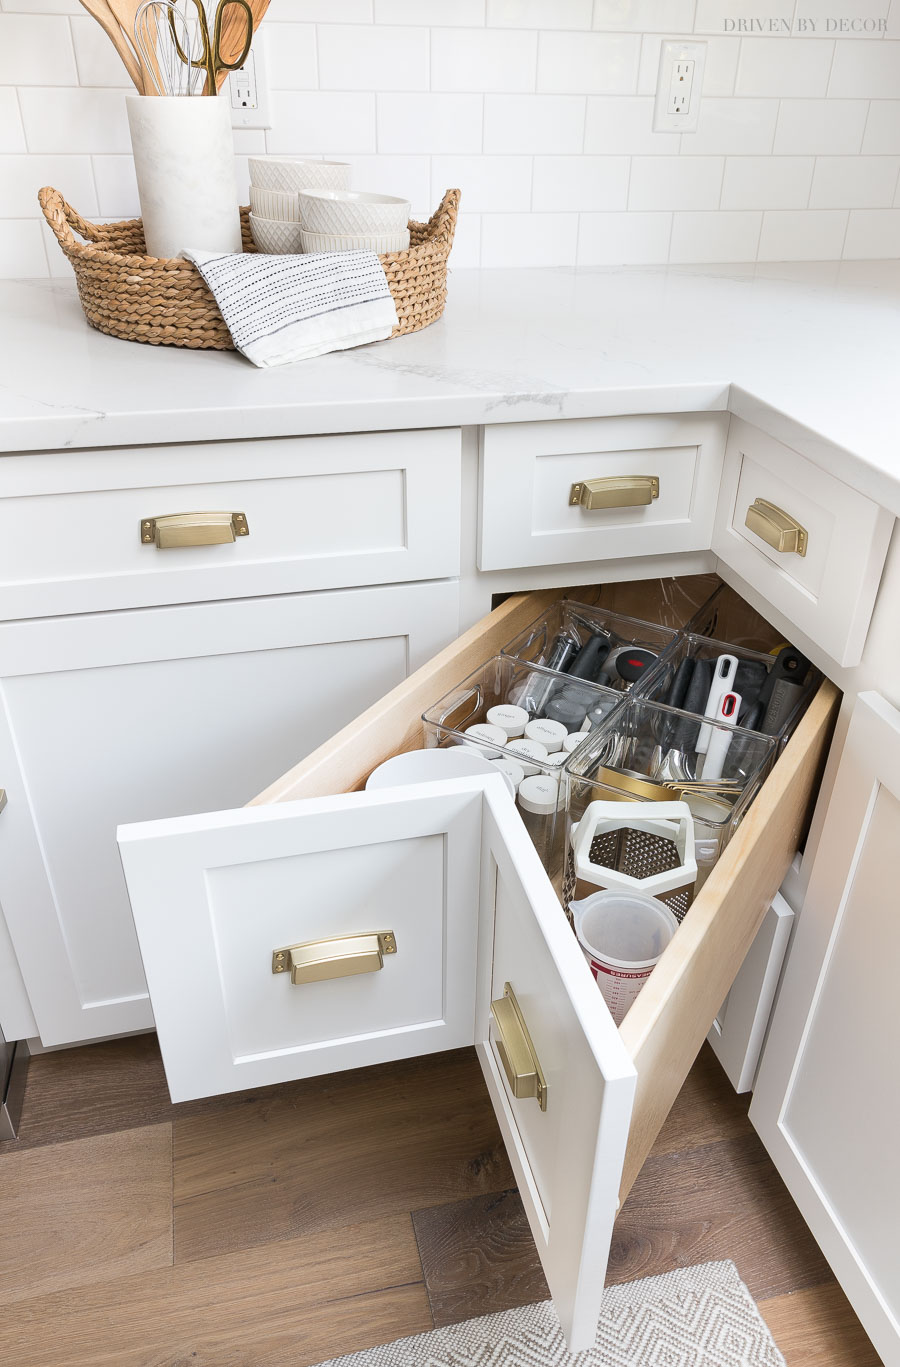 https://www.drivenbydecor.com/wp-content/uploads/2018/08/kitchen-cabinet-corner-deep-drawer-storage-organization-2.jpg